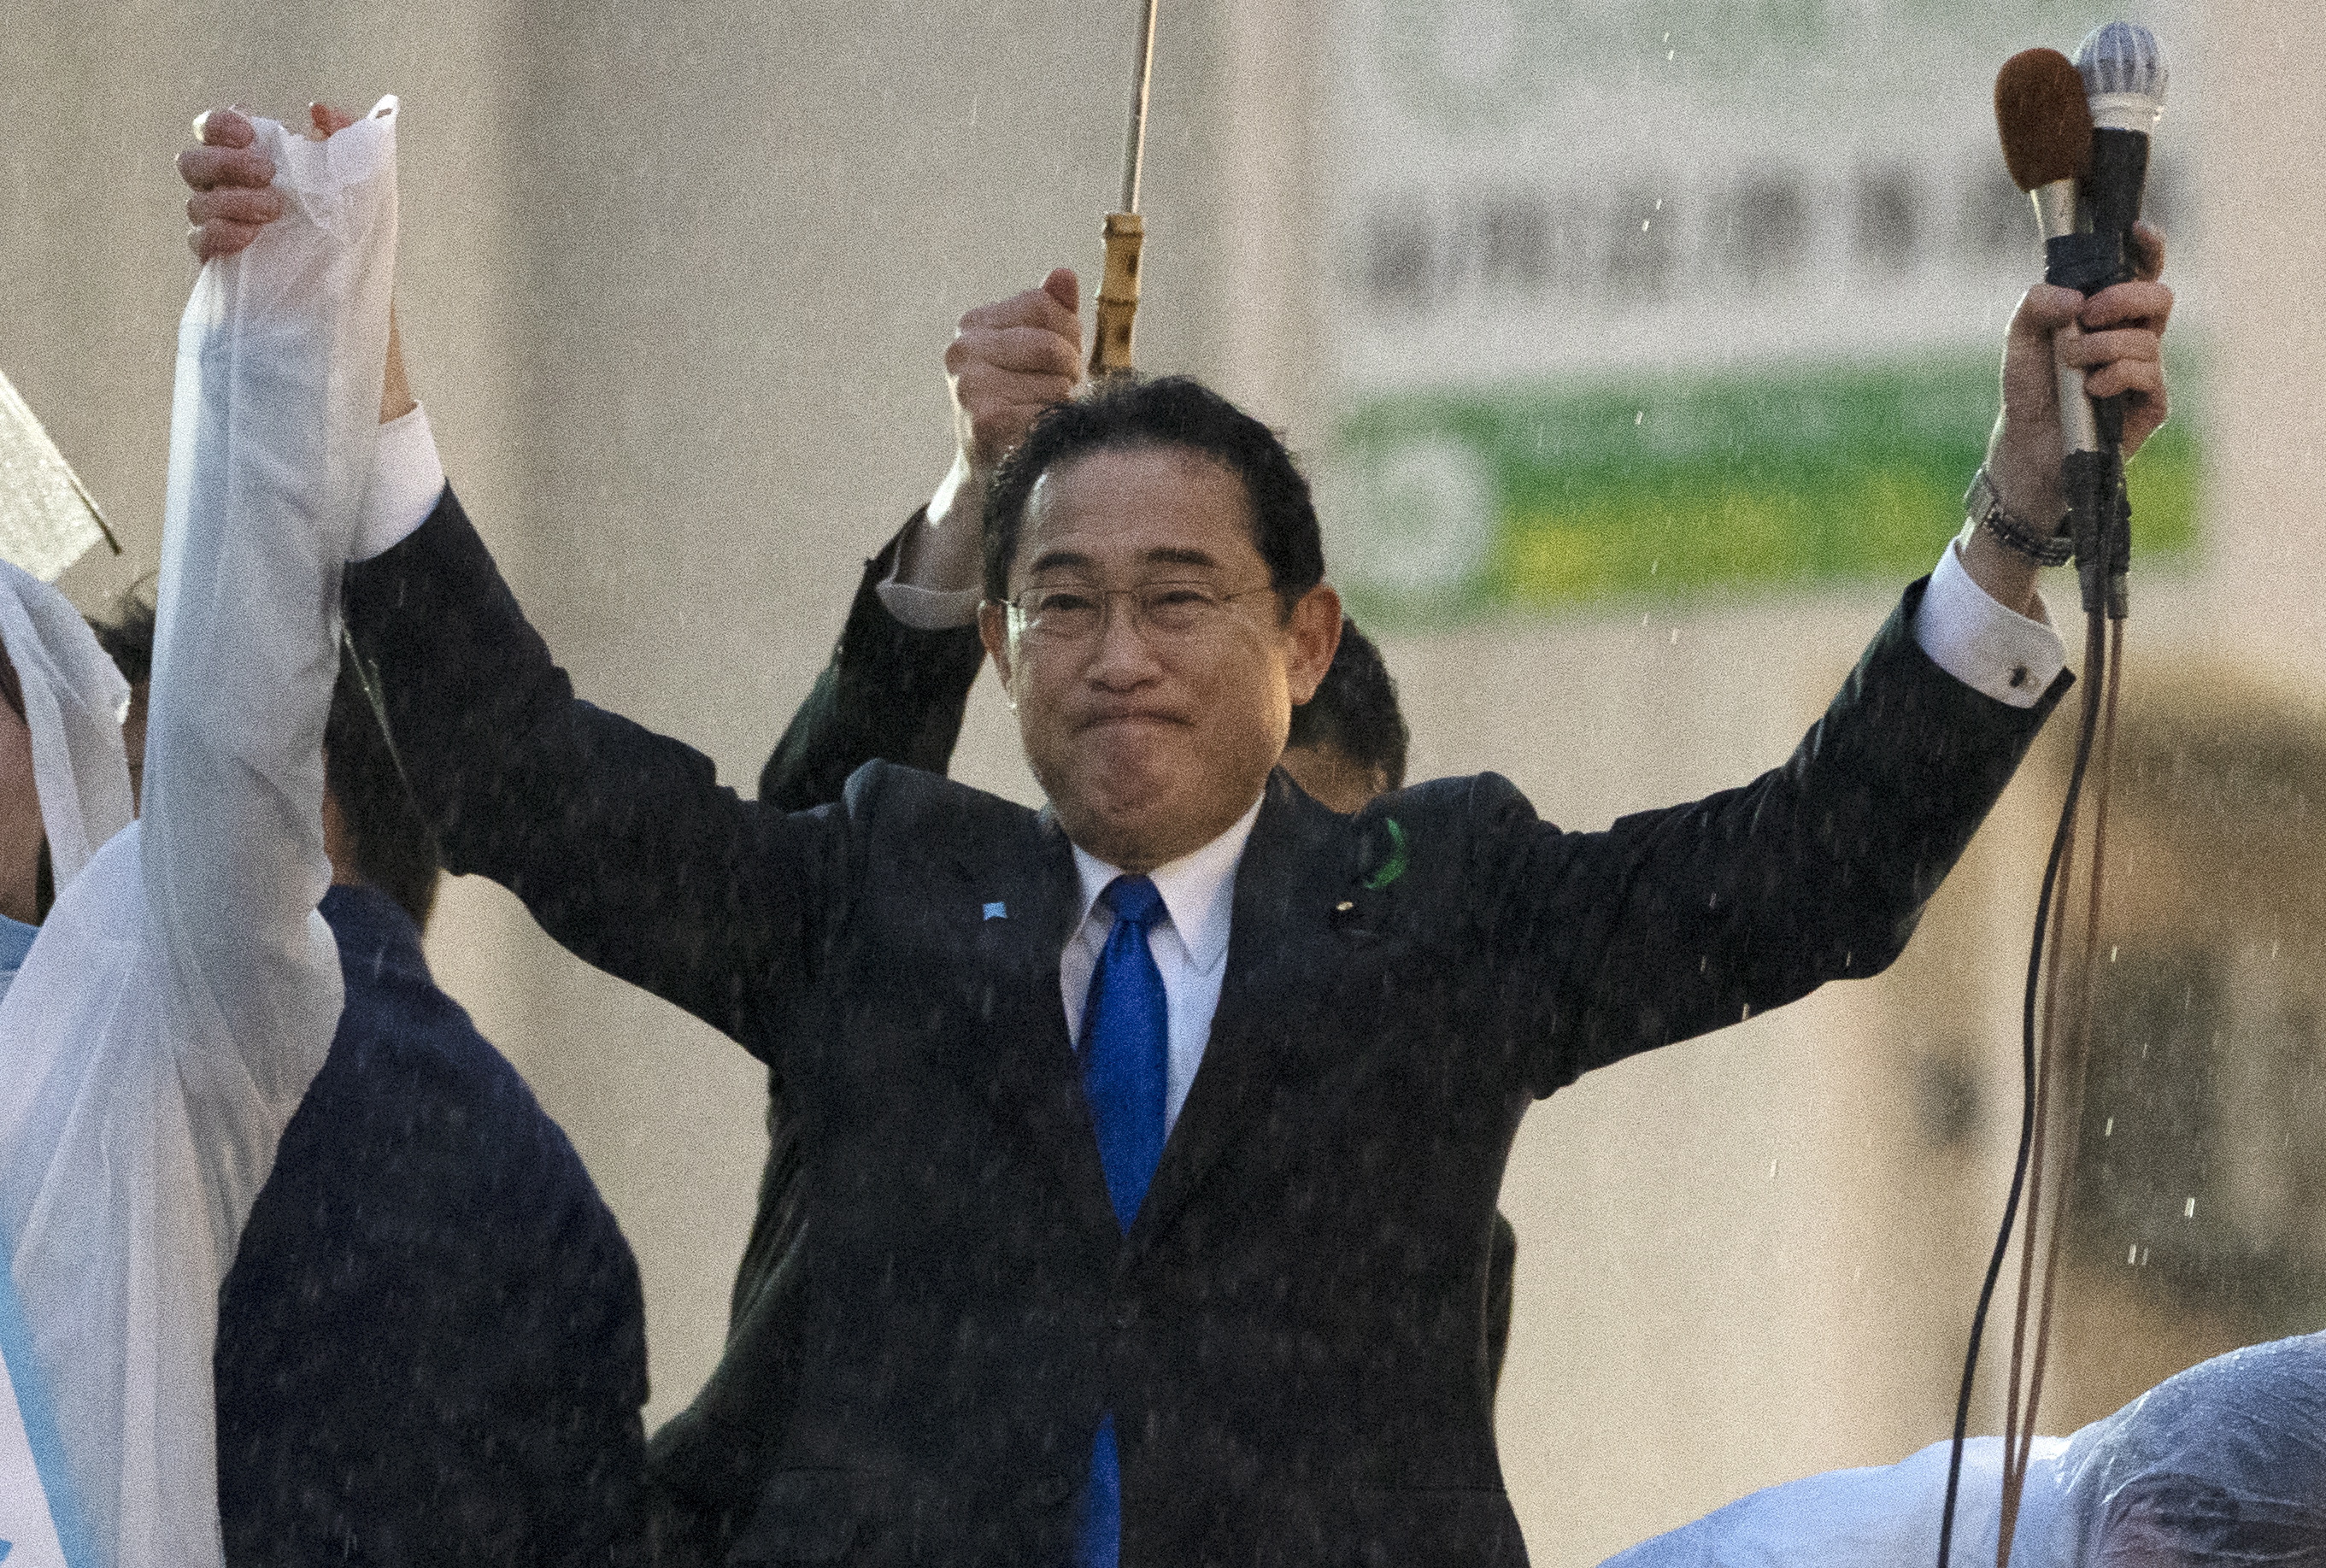 Japan's prime minister delivers stump speech in Ichikawa following Wakayama incident